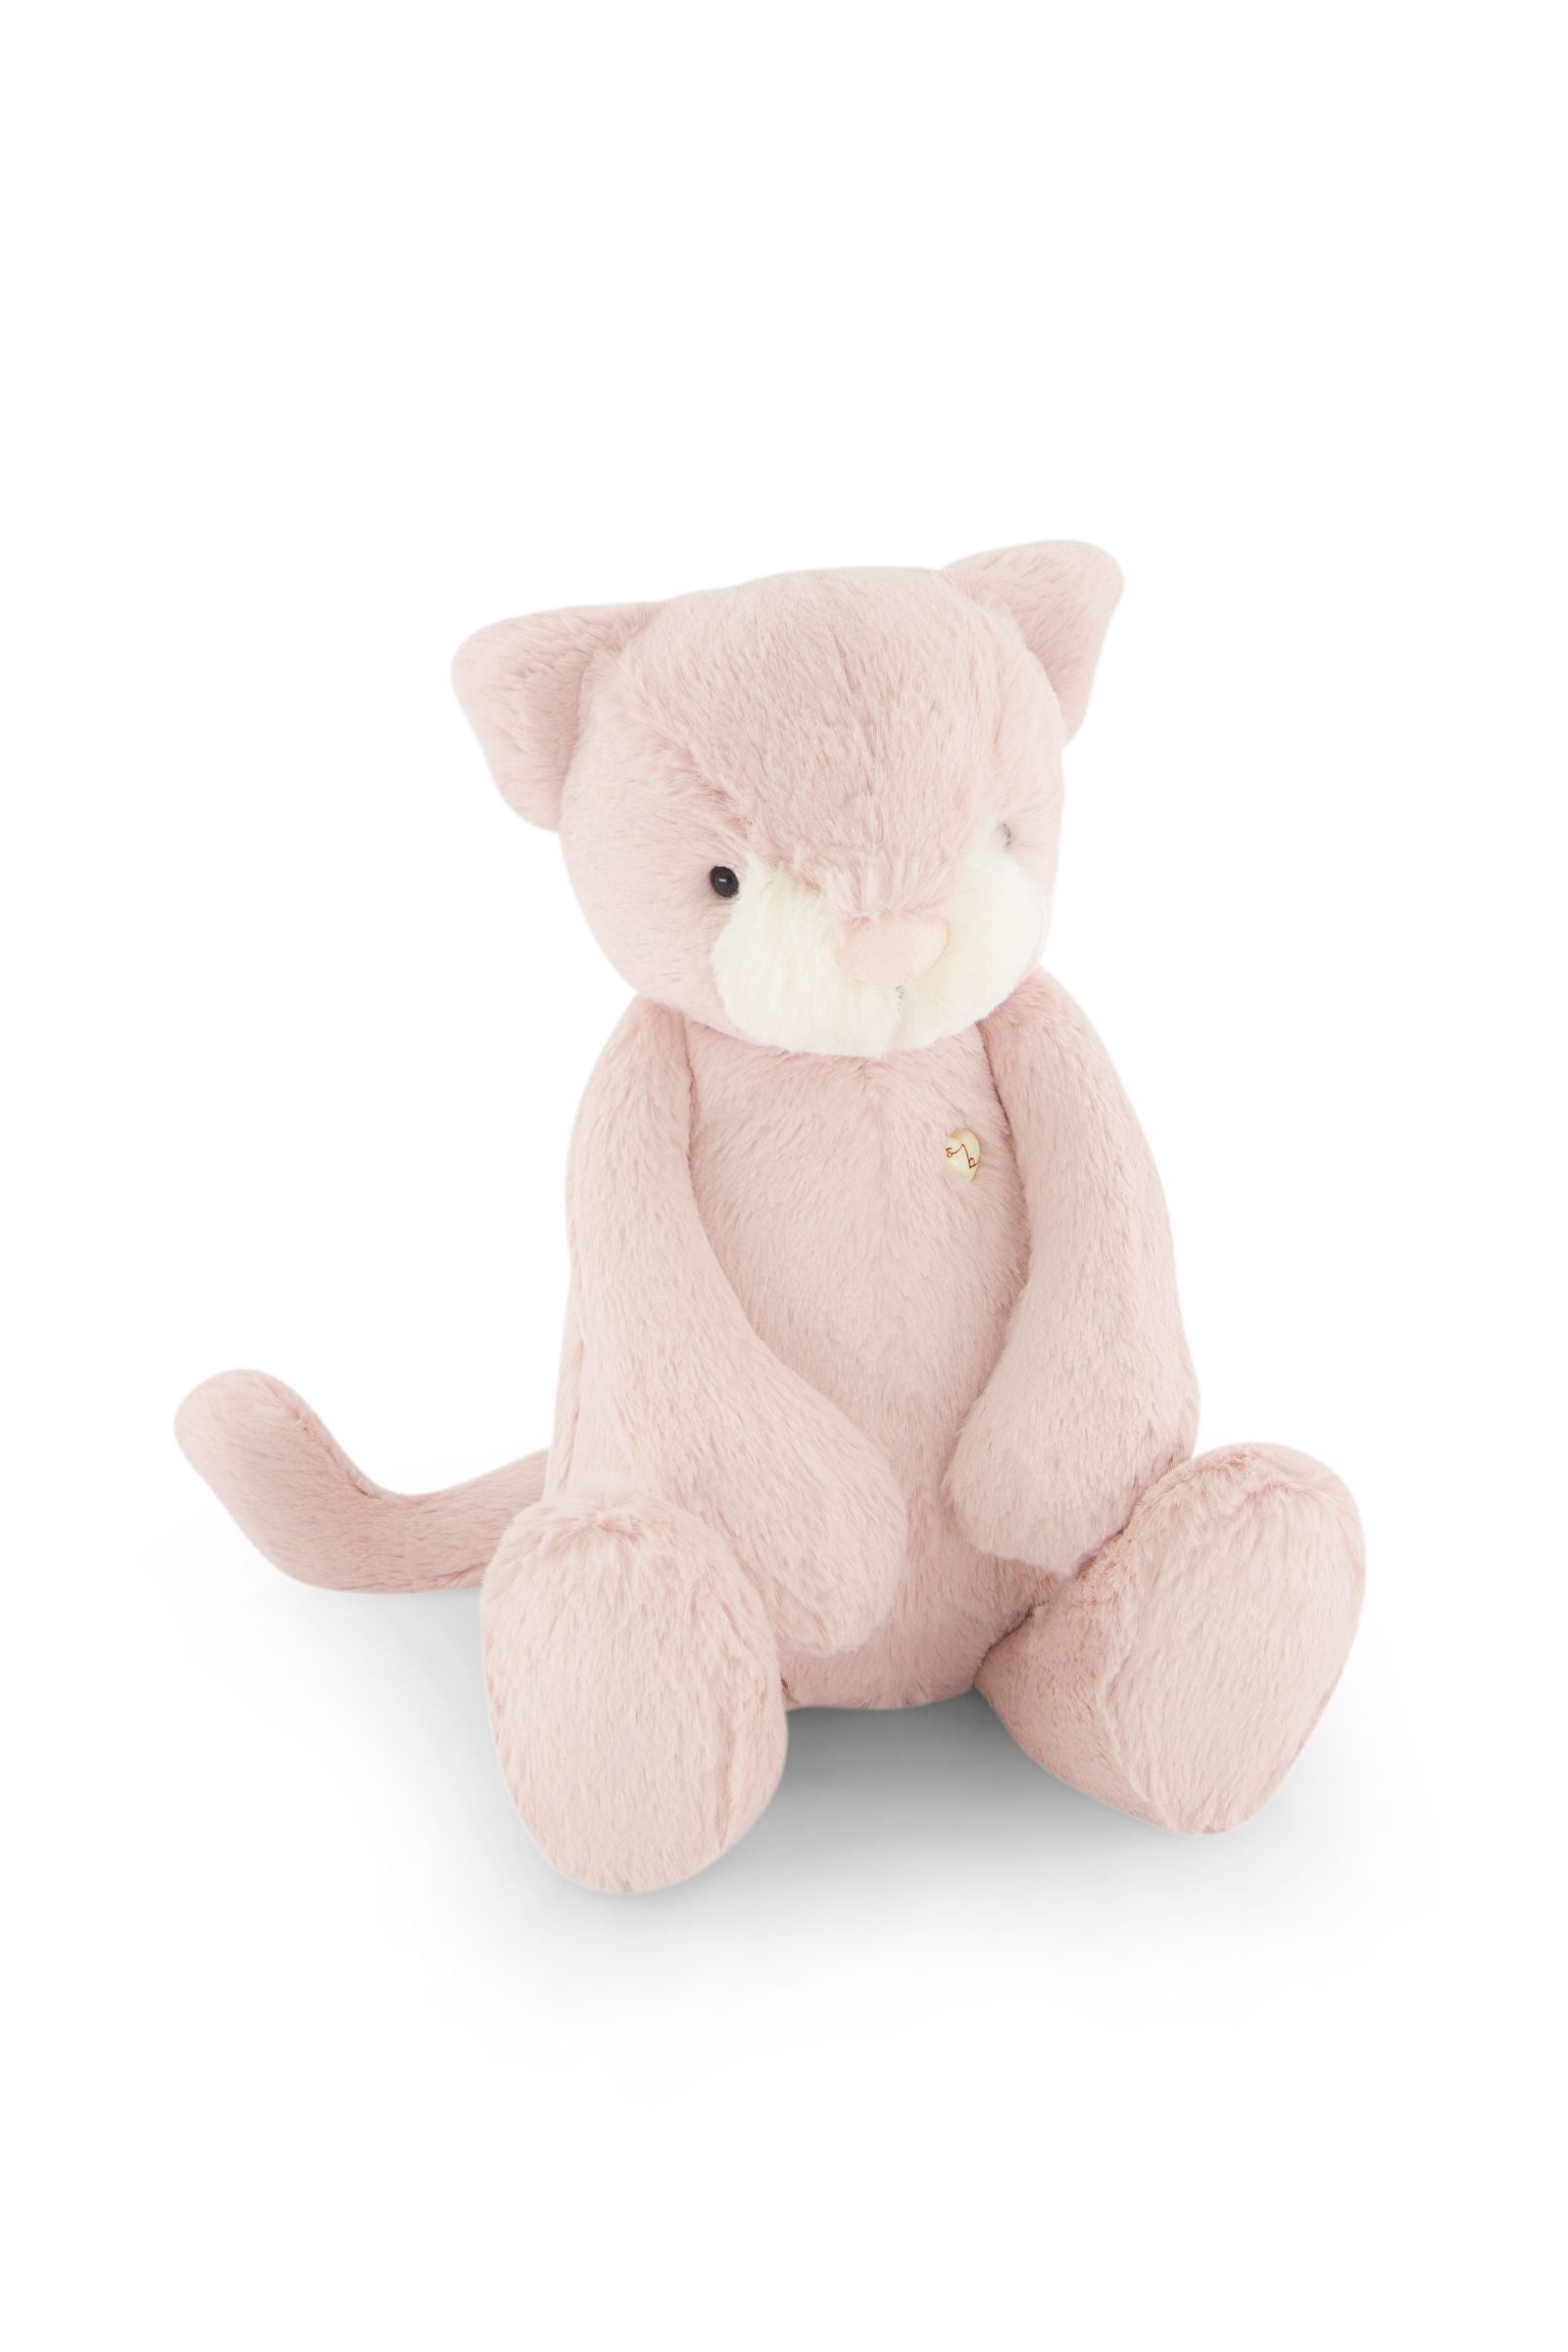 Snuggle Bunnies - Elsie the Kitty - Blush 30cm-Toys-Jamie Kay-The Bay Room